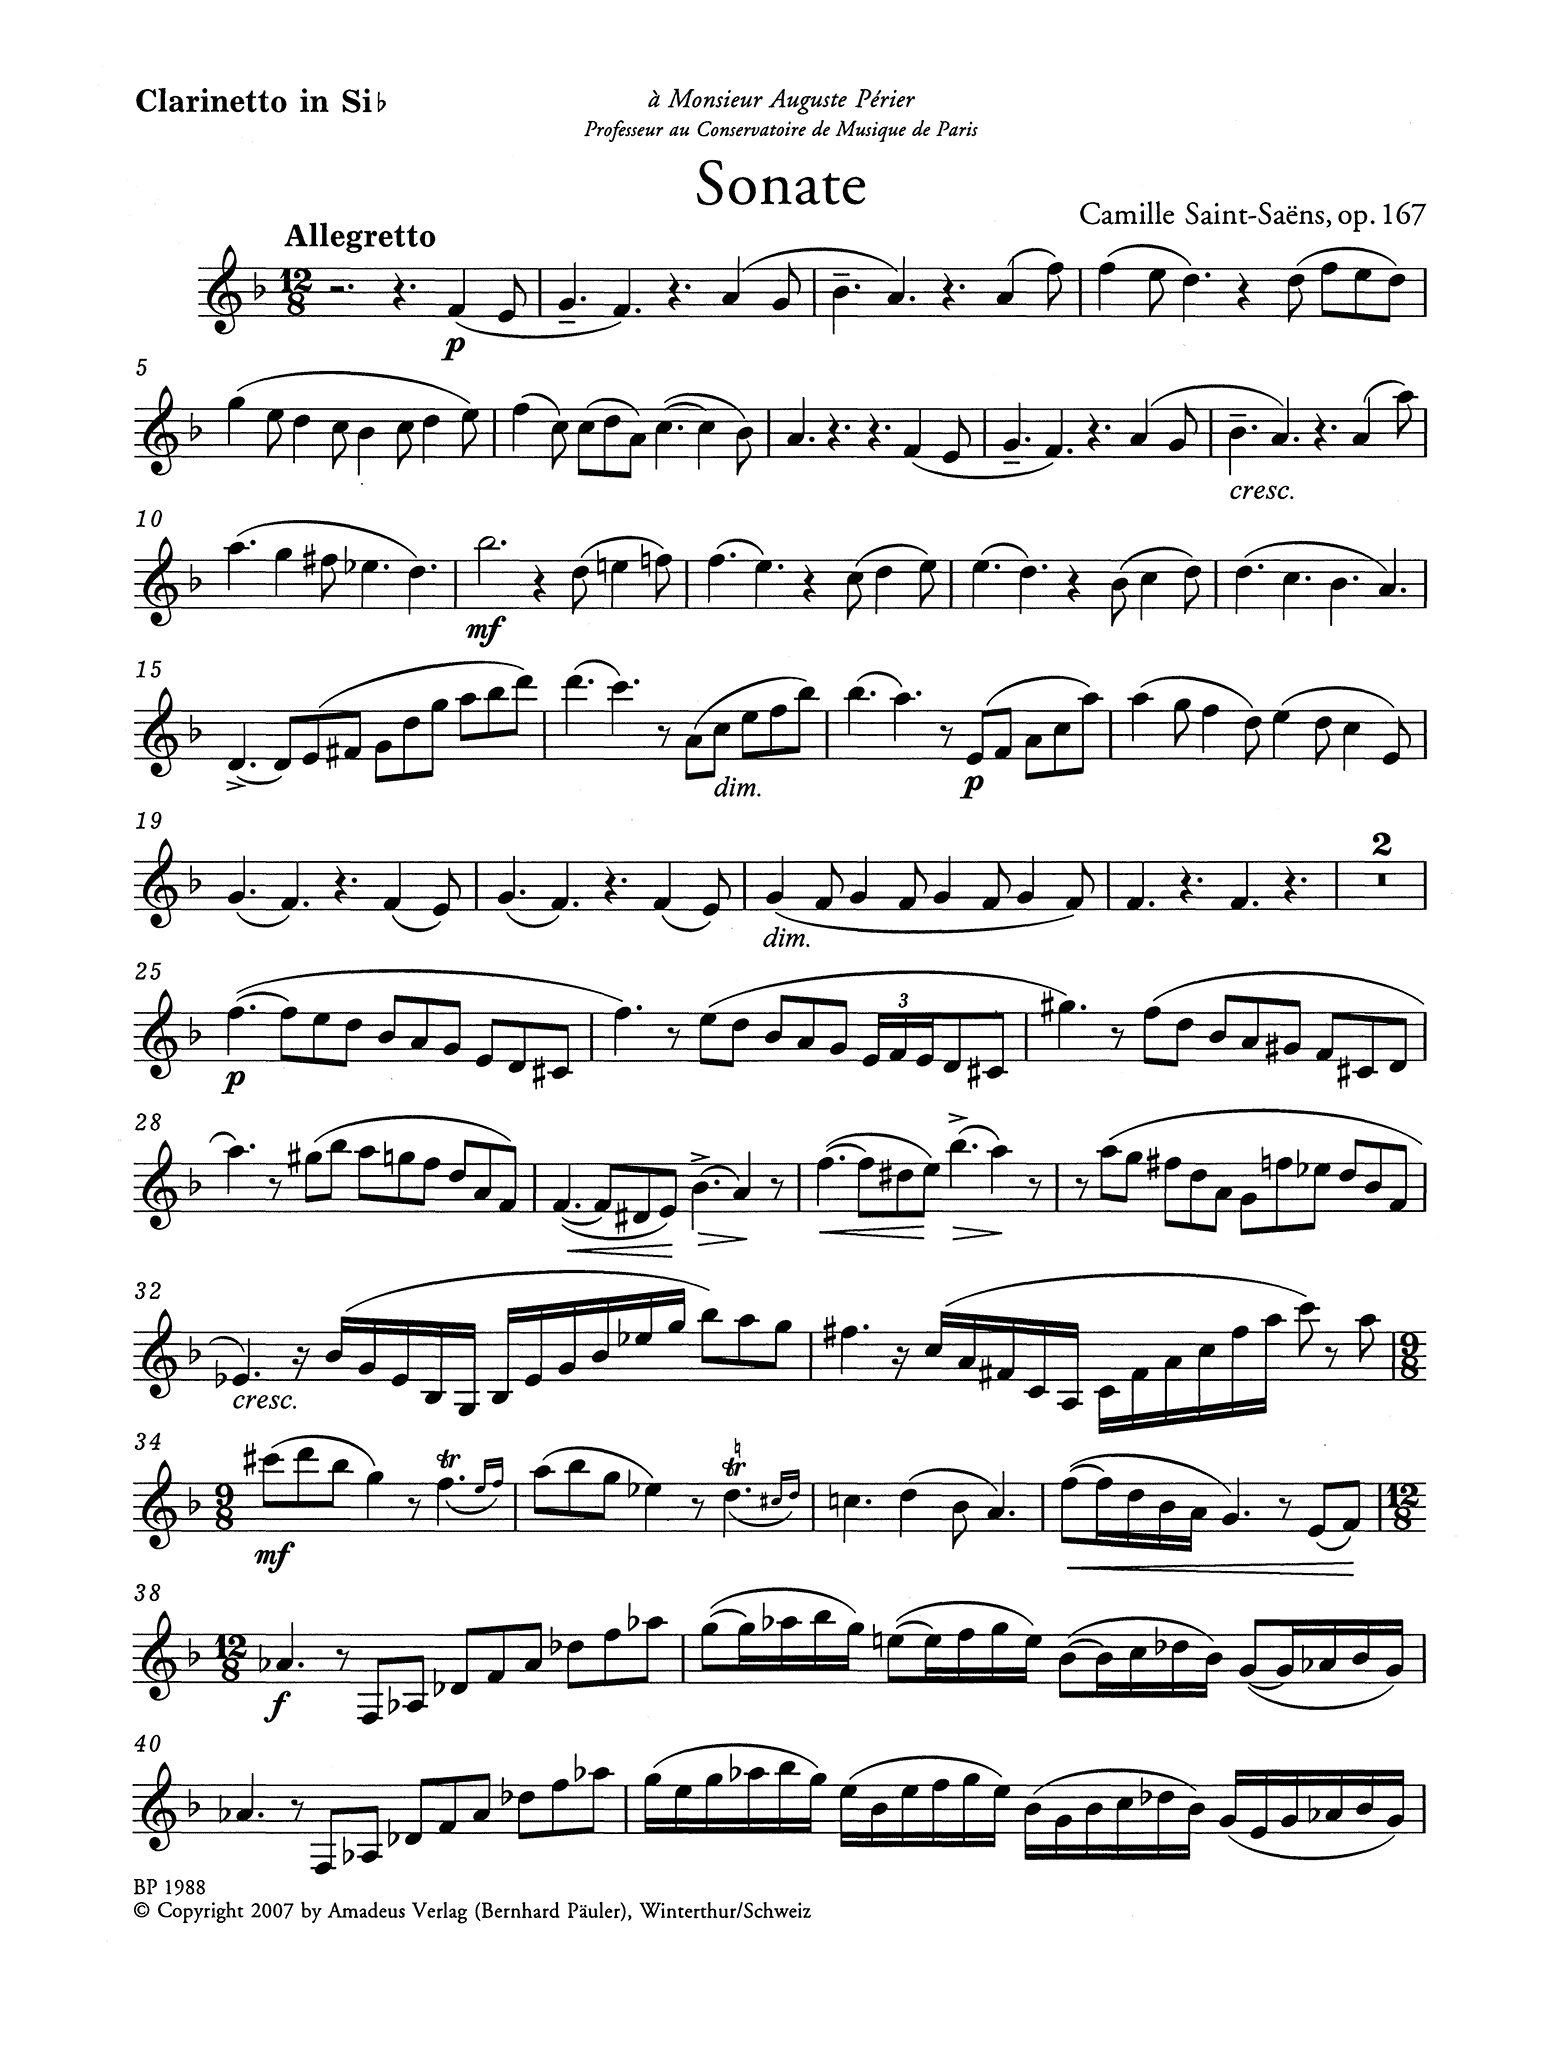 Saint-Saëns Clarinet Sonata Op. 167 Clarinet part